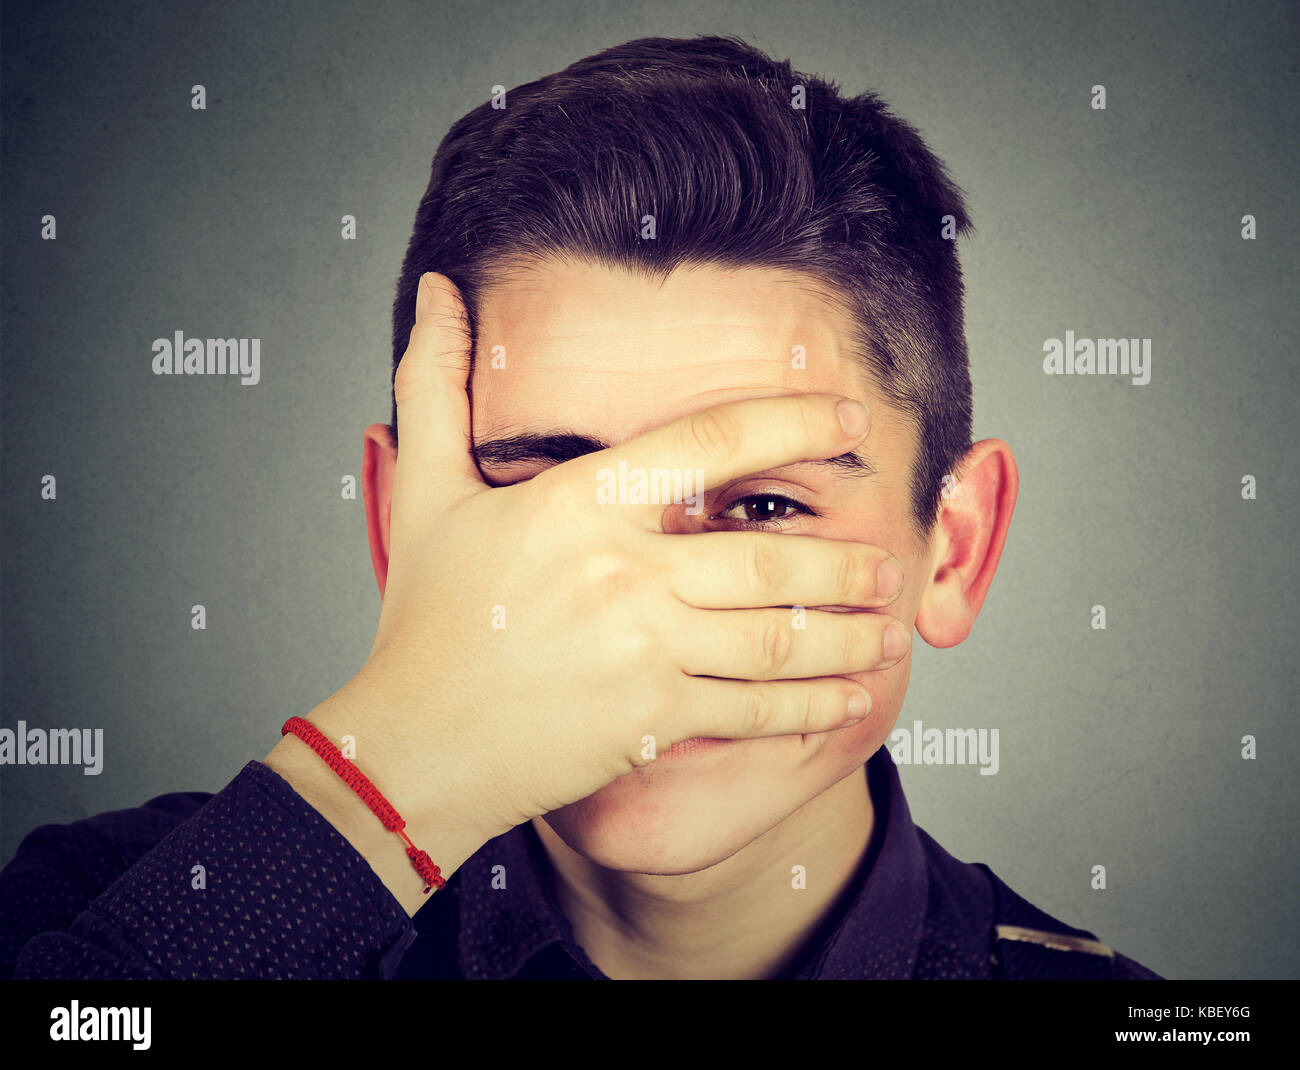 Portrait of a shy man peeking through his fingers Stock Photo